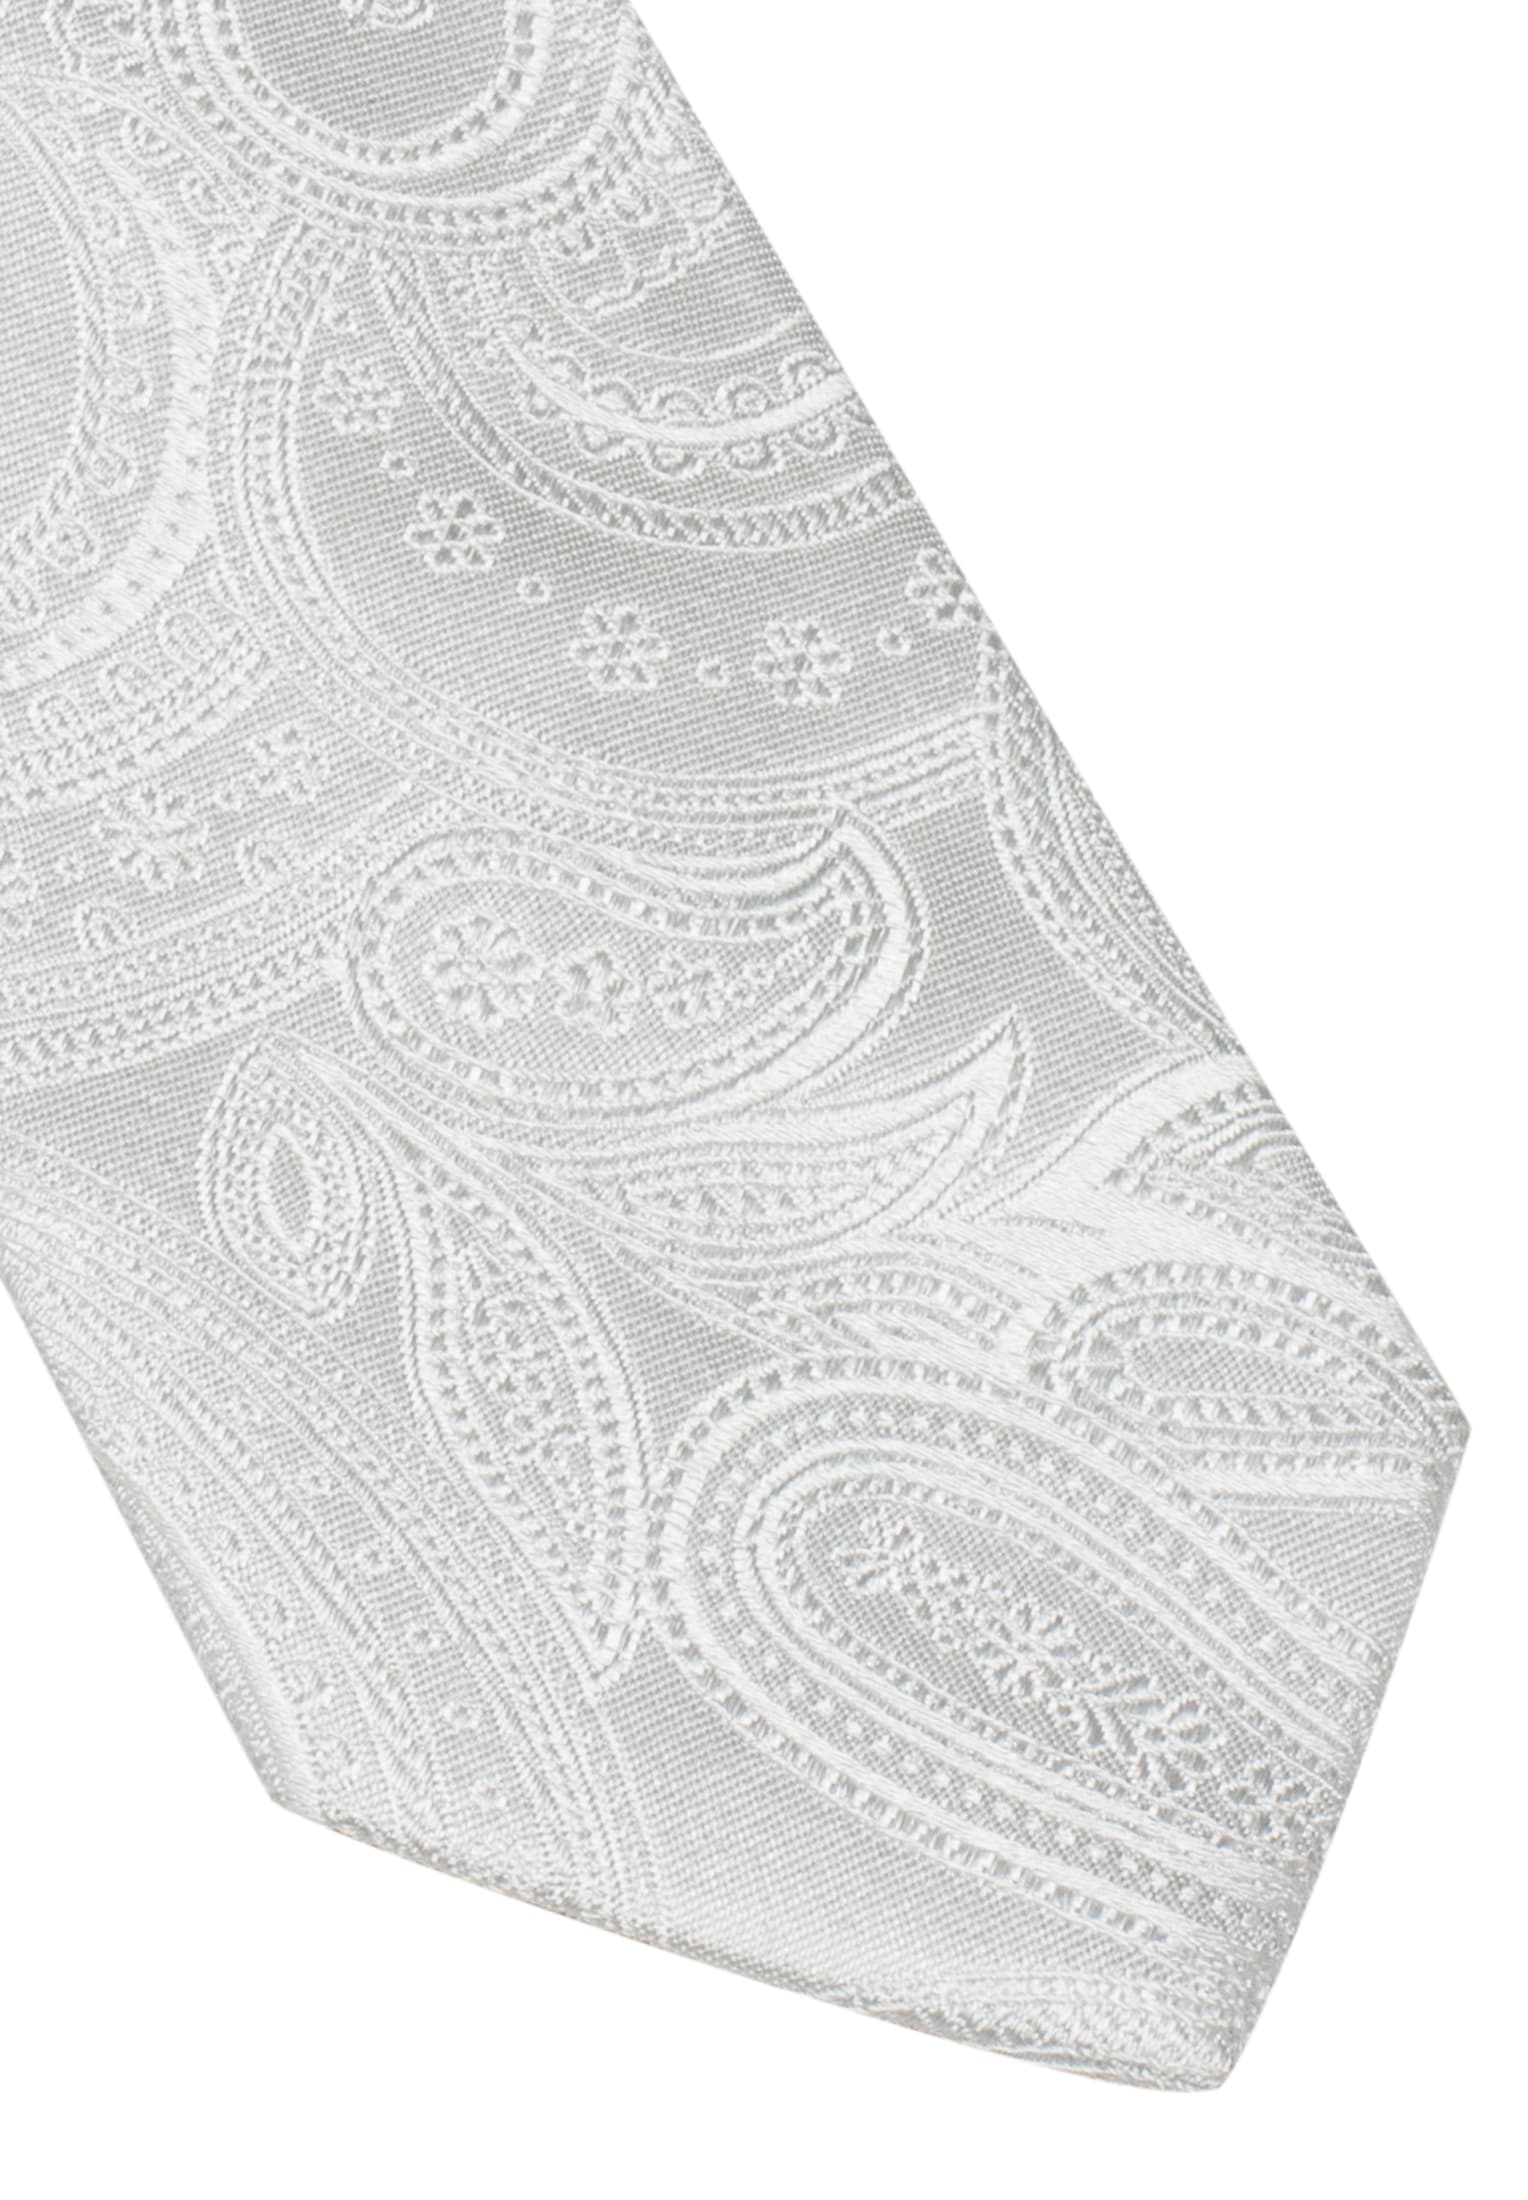 Krawatte in silber gemustert | silber | 160 | 1AC01869-03-11-160